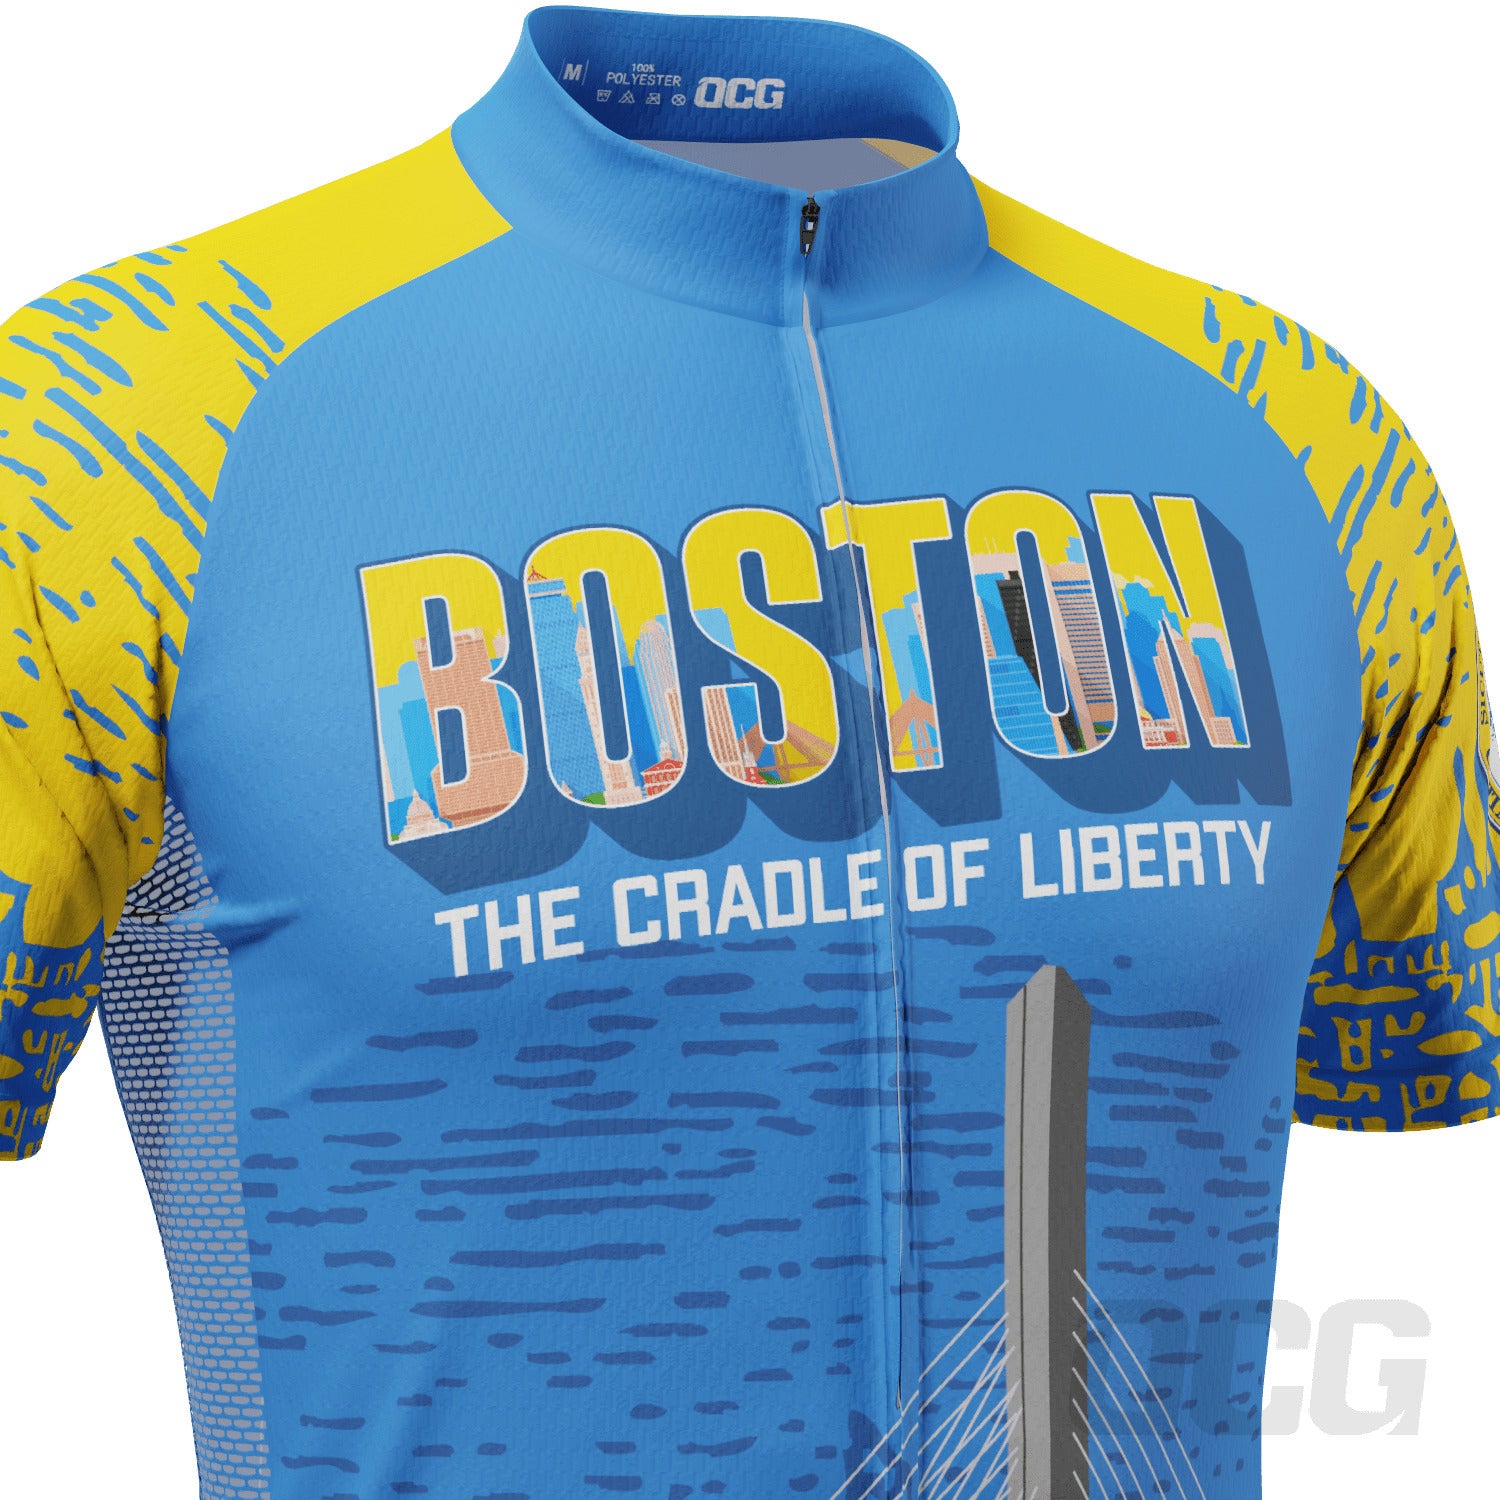 Men's Around The World - Boston Short Sleeve Cycling Jersey